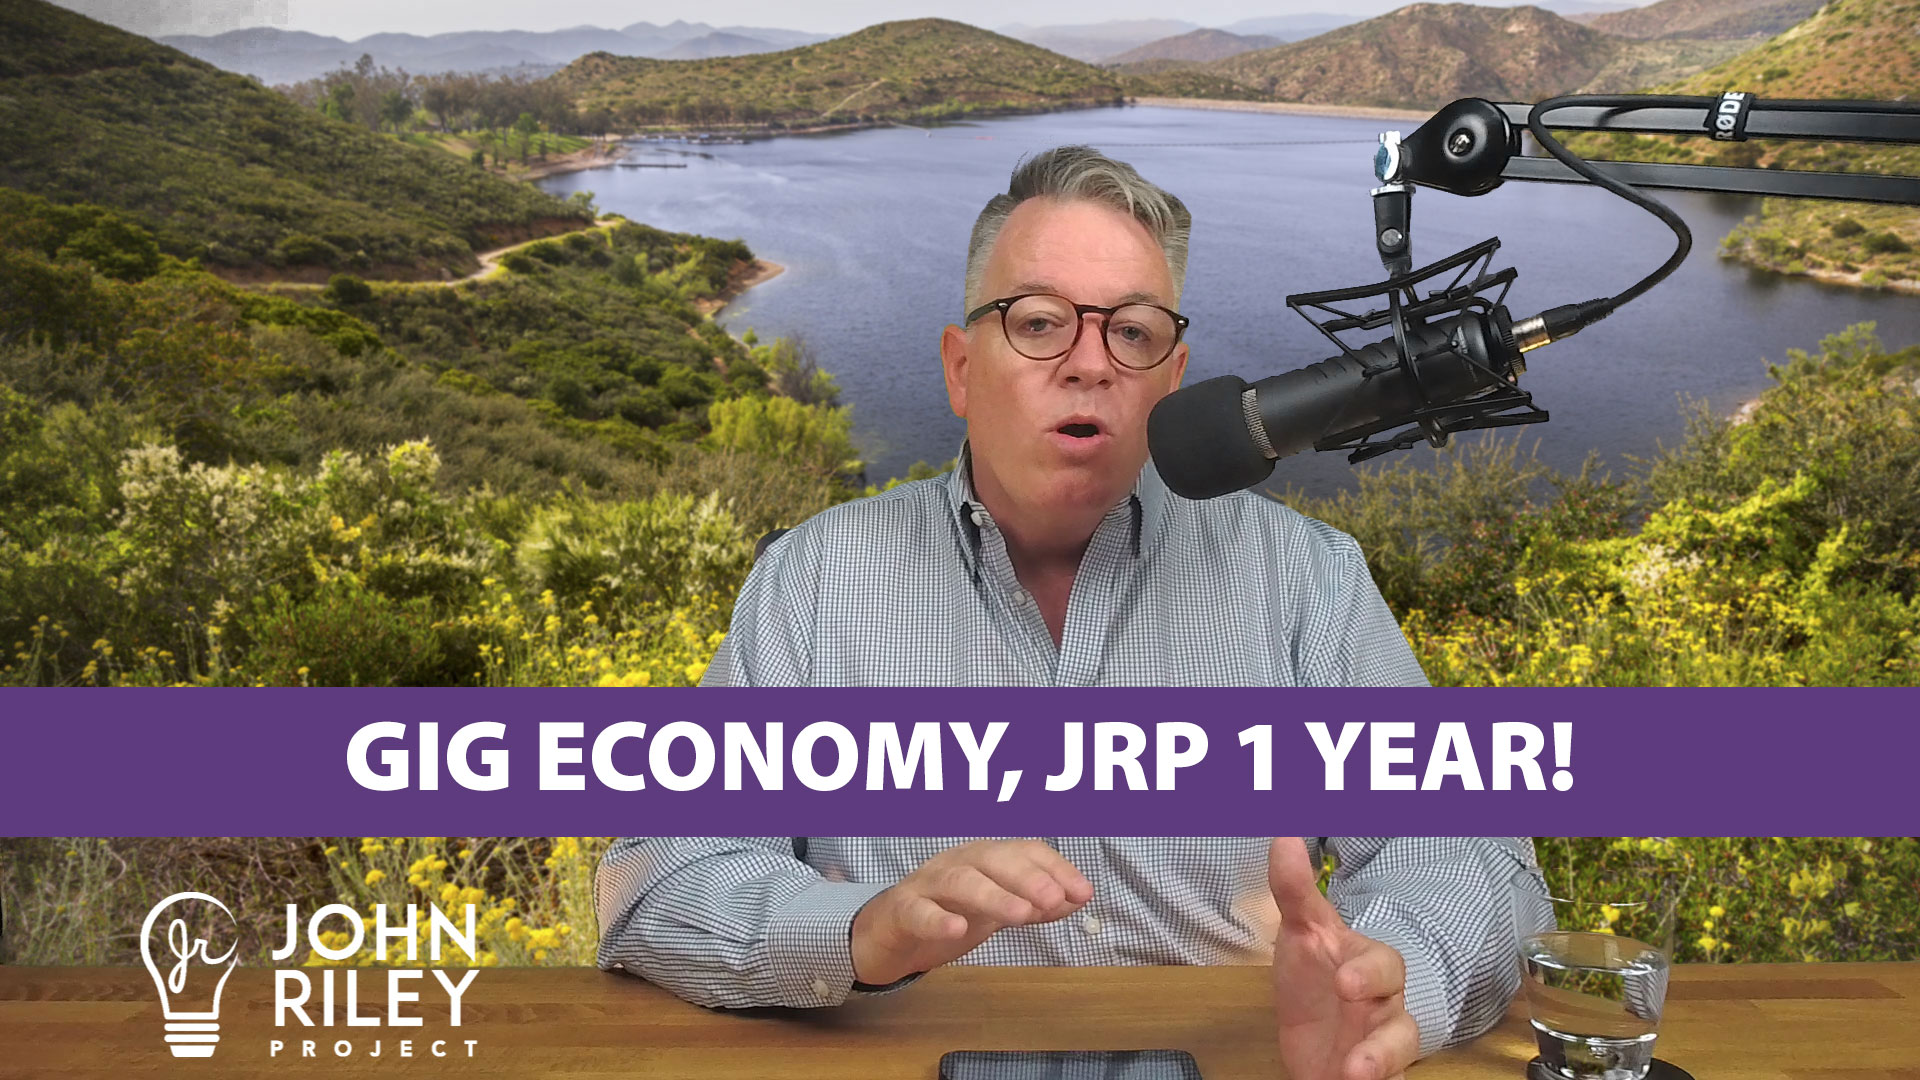 gig economy, AB5, John Riley Project, JRP 1 Year Anniversary, JRP0076